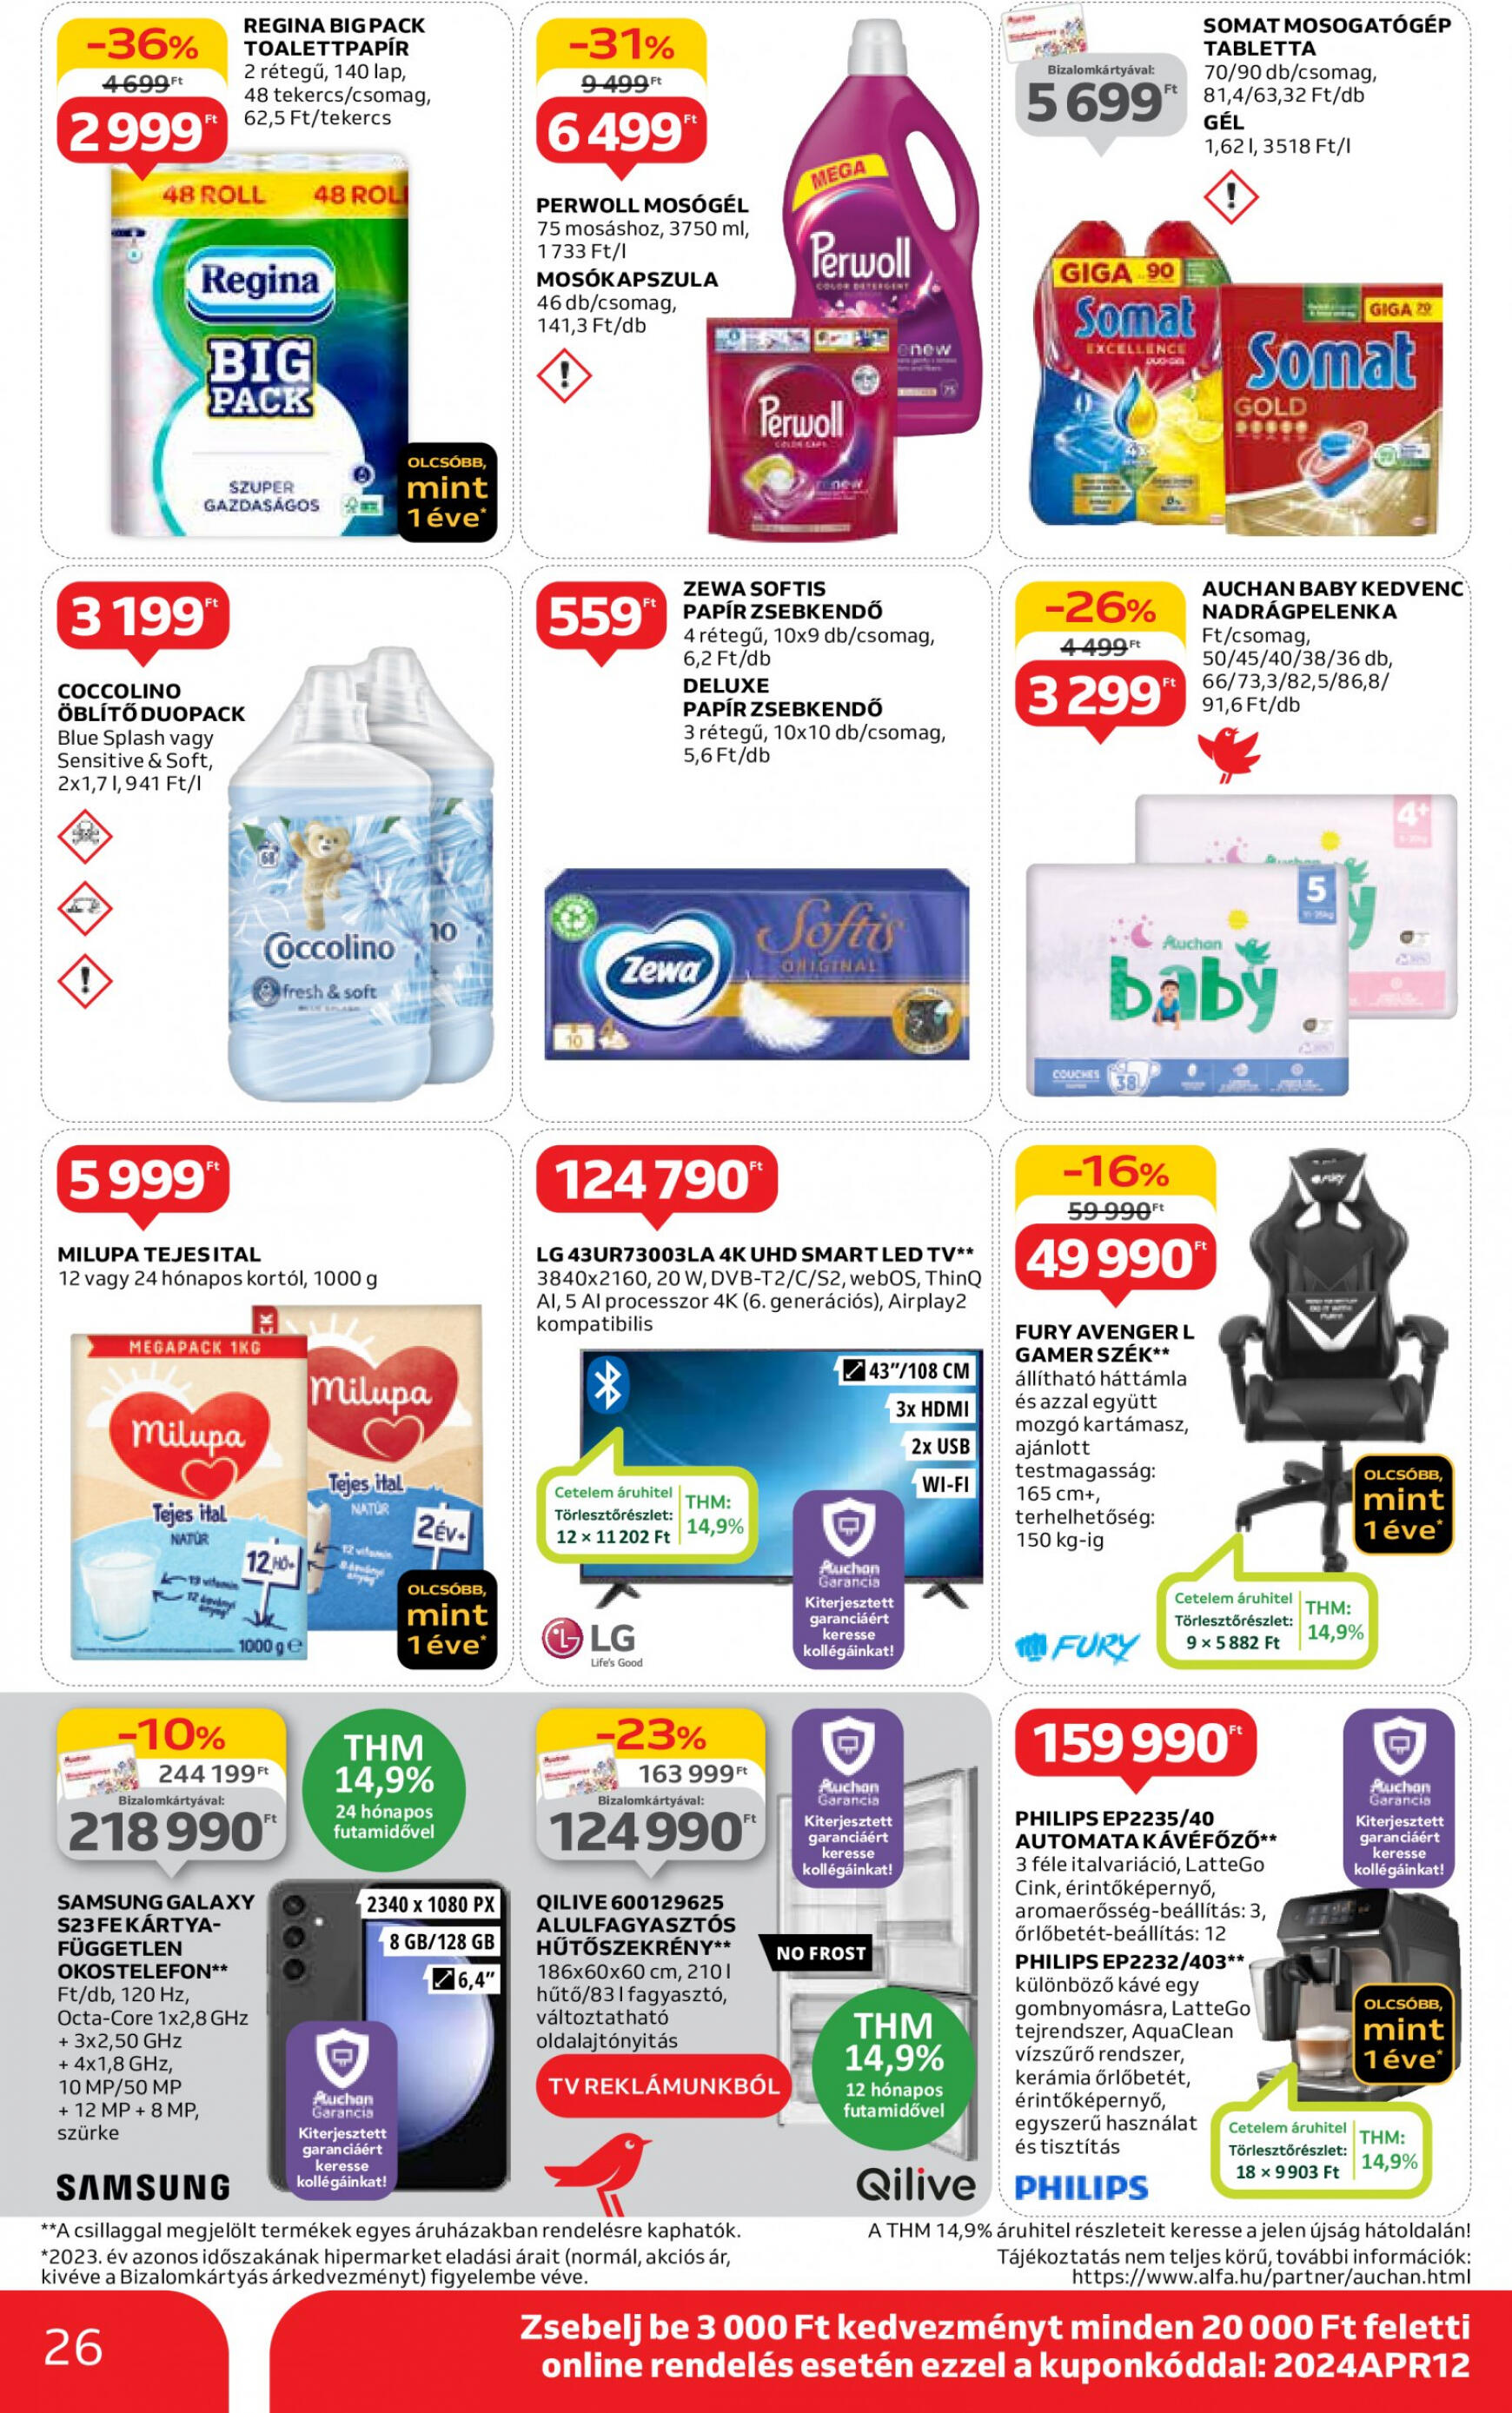 auchan - Aktuális újság Auchan 04.18. - 04.24. - page: 26